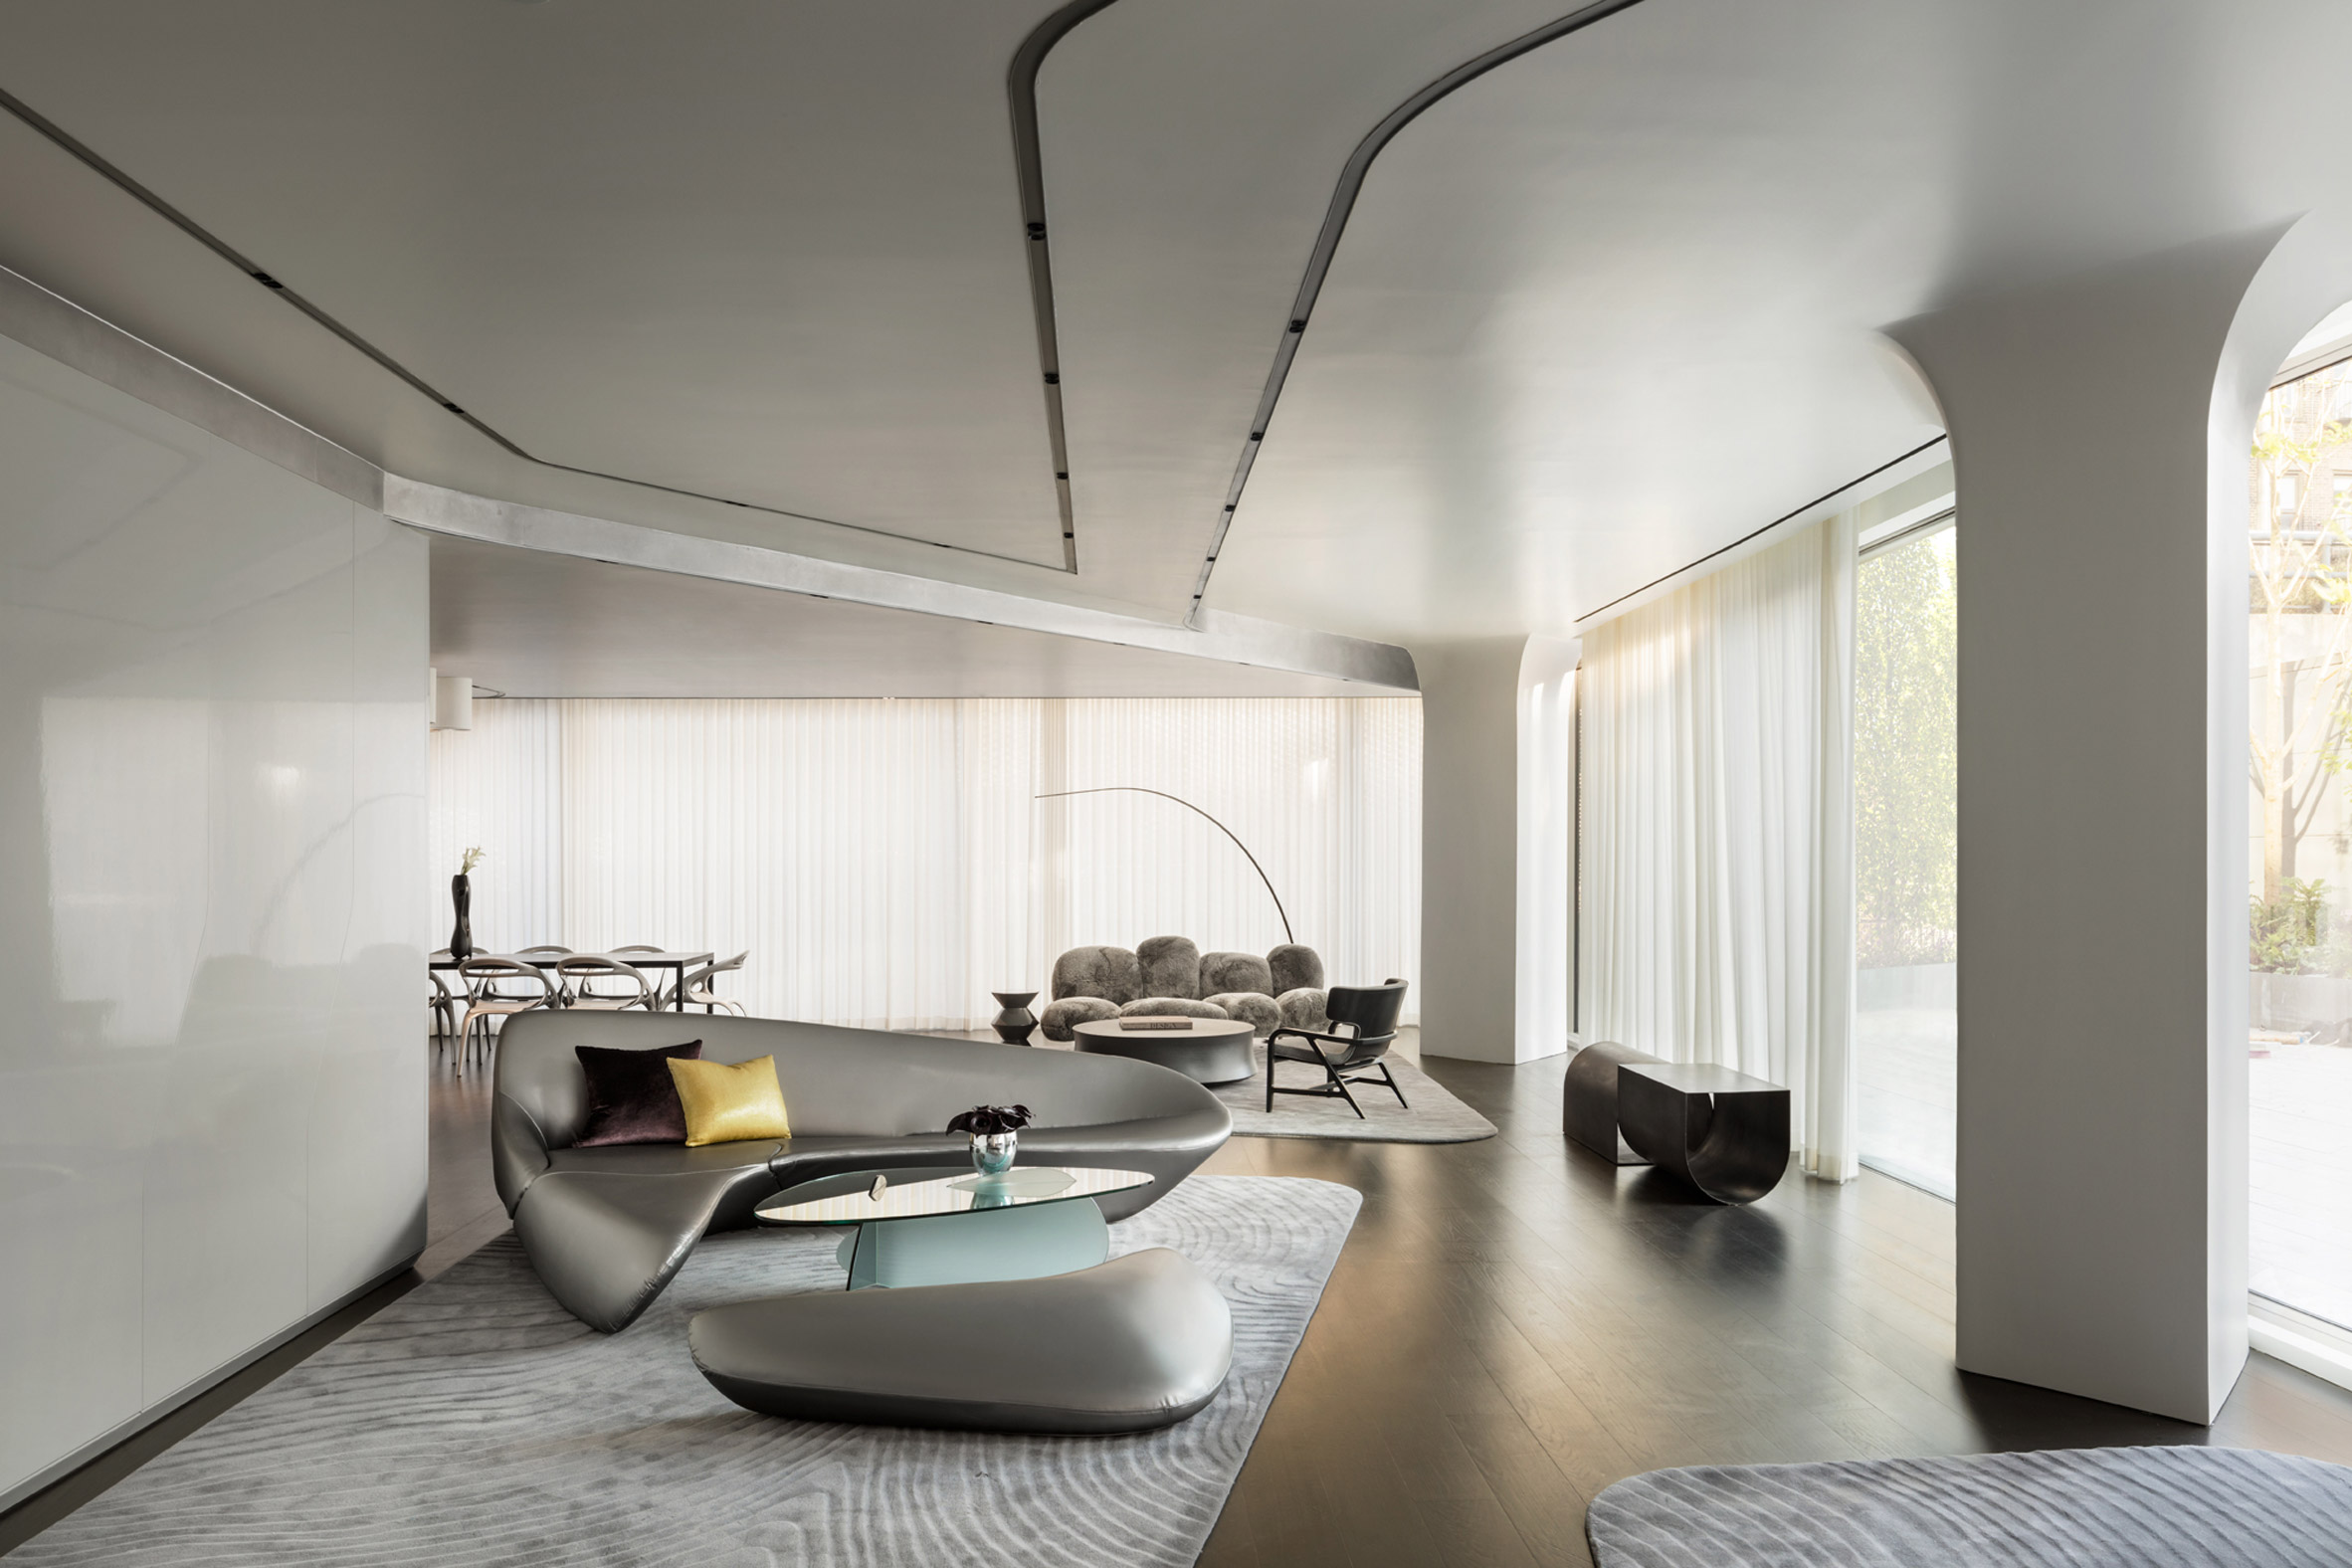 520 W 28th Amenities by Zaha Hadid Architects